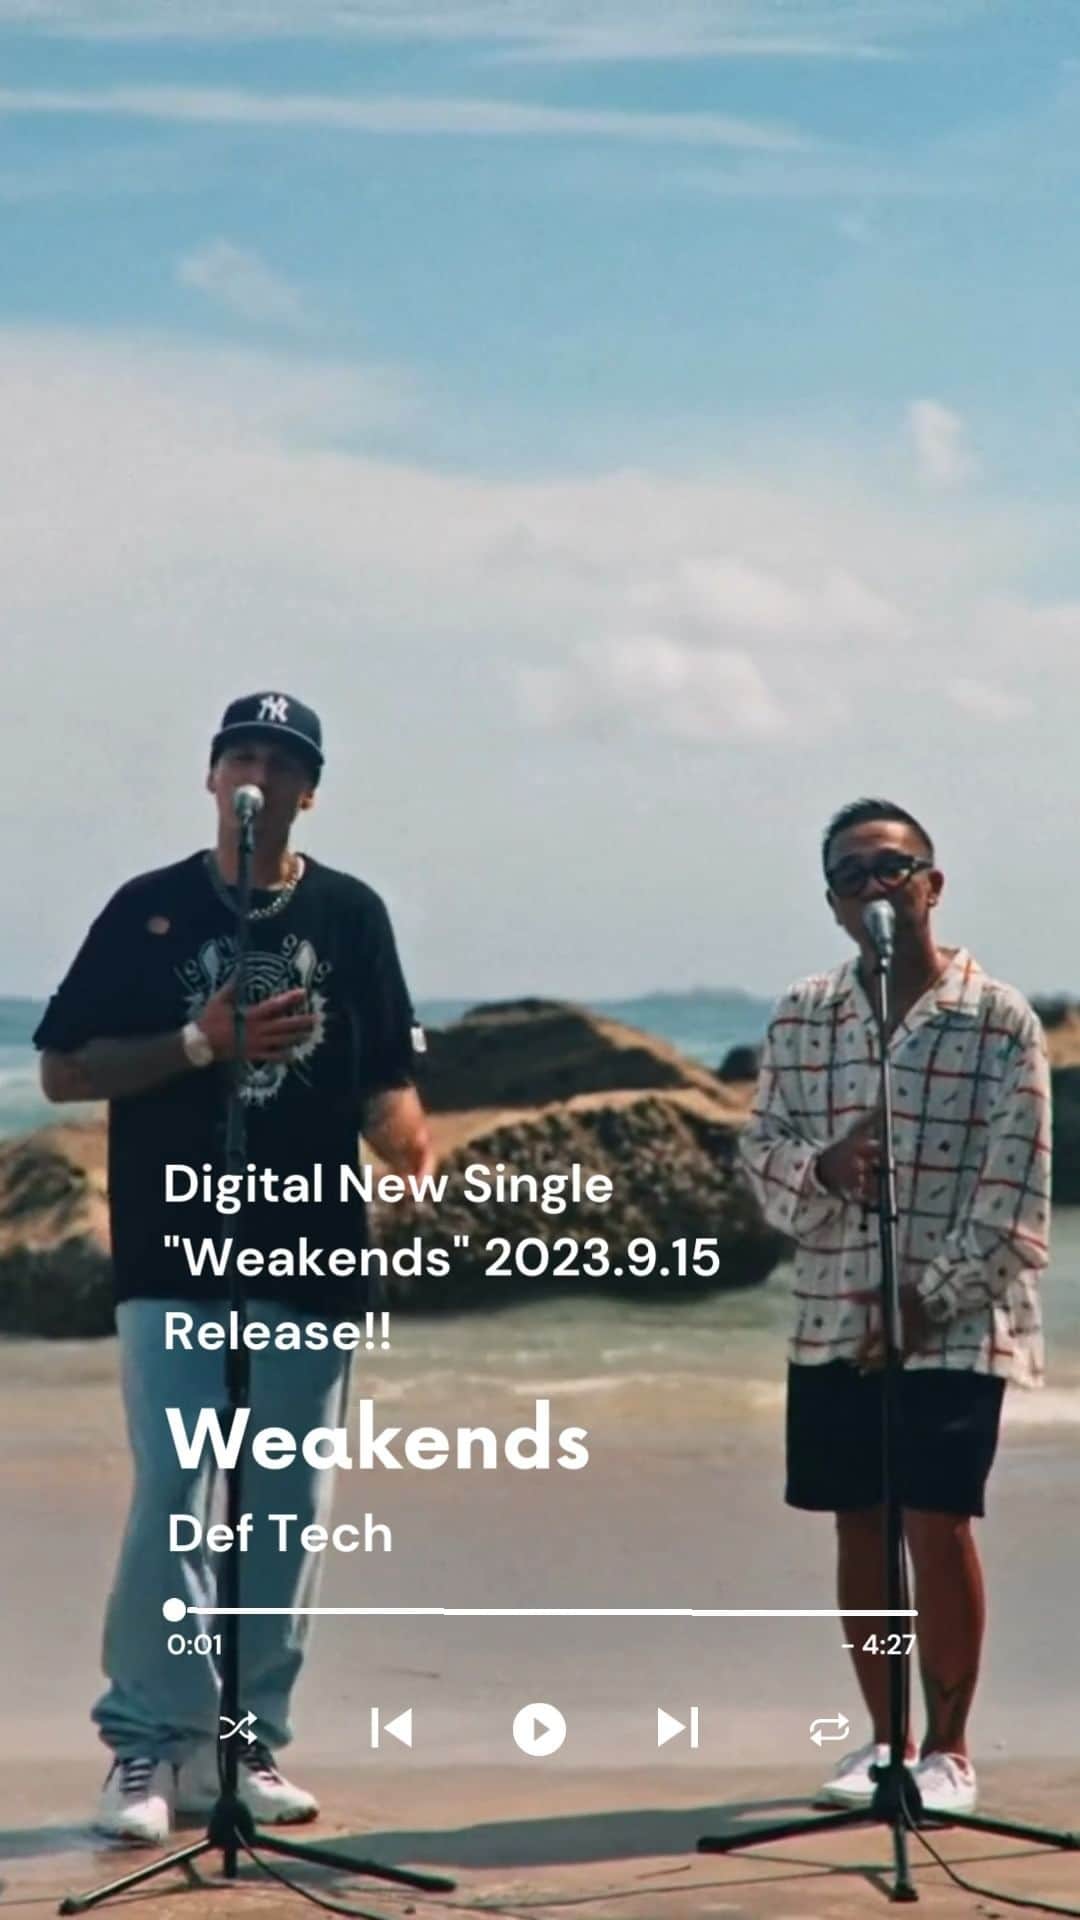 Def Techのインスタグラム：「Digital New Single "Weakends" 2023.9.15 Release!!  ▼"Weakends" Streaming & Download https://linkco.re/A1ThXRgM  ▼Def Tech - Weakends【Official Music Video】 https://youtu.be/xNYXU60kklg  "Weakends"と題された楽曲は、ウクレレの音色が心地よいホリデイチューン。 Jawaiian Reggaeを確立したDef Techならではの、アコースティックとビートメイクされたサウンド。 "季節の移ろいを感じて Let's go of all season" 夏が越えても君とオールシーズン過ごそうよ、と優しく寄り添う楽曲が完成。 Shen & Microの美しいハーモニーとレゲエボイスのコントラストが秀逸な1曲に仕上がった。  #DefTech #Weakends  ＝＝＝＝＝ Def Tech The Sound Waves Tour 2023 Def Techが贈る、秋の全国5都市ワンマンツアー「The Sound Waves Tour 2023」が開催決定！ Shen & Micro が奏でるハーモニーを体感して、心揺さぶる音楽の波に包まれよう！  ★ 各プレイガイド チケット一般発売スタート！  ▼ 開催日程 9月15日（金） 愛知：日本特殊陶業市民会館 ビレッジホール 9月17日（日） 千葉：市川市文化会館 大ホール 9月28日（木） 東京：TOKYO DOME CITY HALL 9月29日（金） 大阪：オリックス劇場 10月1日（日） 福岡：福岡国際会議場 メインホール  ▼ お申し込みはコチラ（ローソンチケット） http://l-tike.com/deftech/  ▼ お申し込みはコチラ（イープラス） https://eplus.jp/sf/word/0000003631  ▼ お申し込みはコチラ（チケットぴあ） https://t.pia.jp/pia/artist/artists.do?artistsCd=37240188  枚数制限 / 4枚まで 年齢制限 / 5歳以上チケット必要」